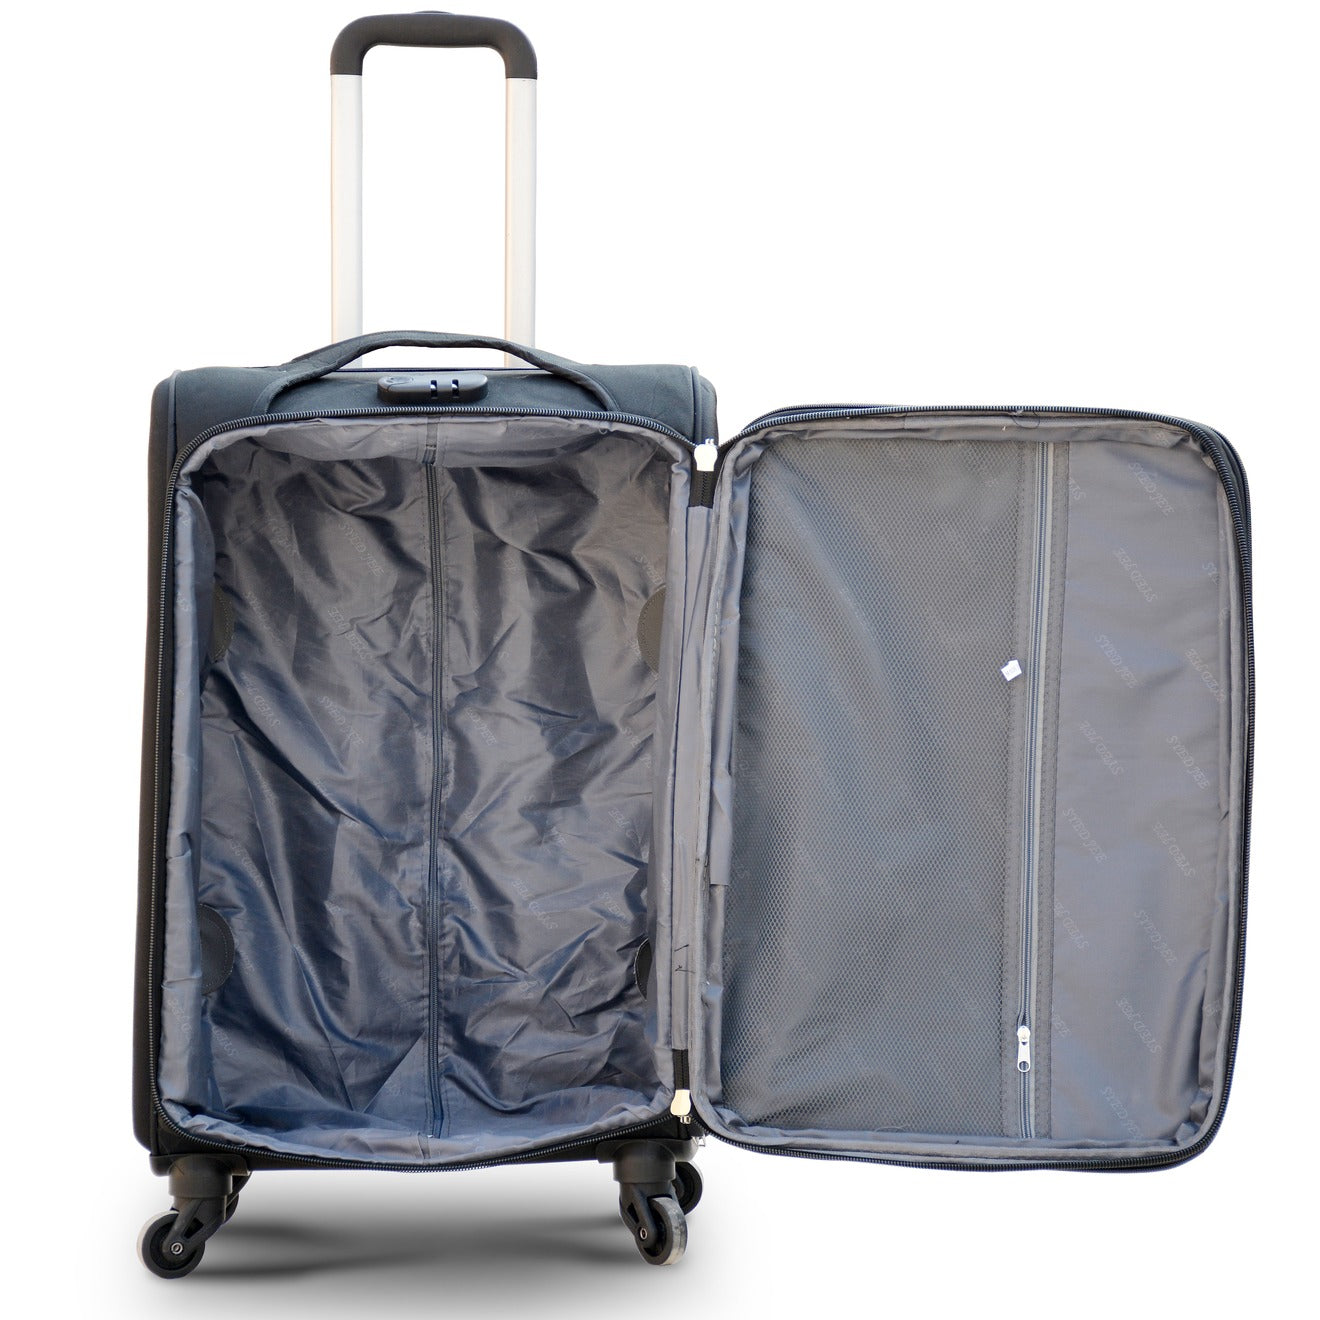 28" Black Colour SJ JIAN 4 Wheel Luggage Lightweight Soft Material Trolley Bag Zaappy.com